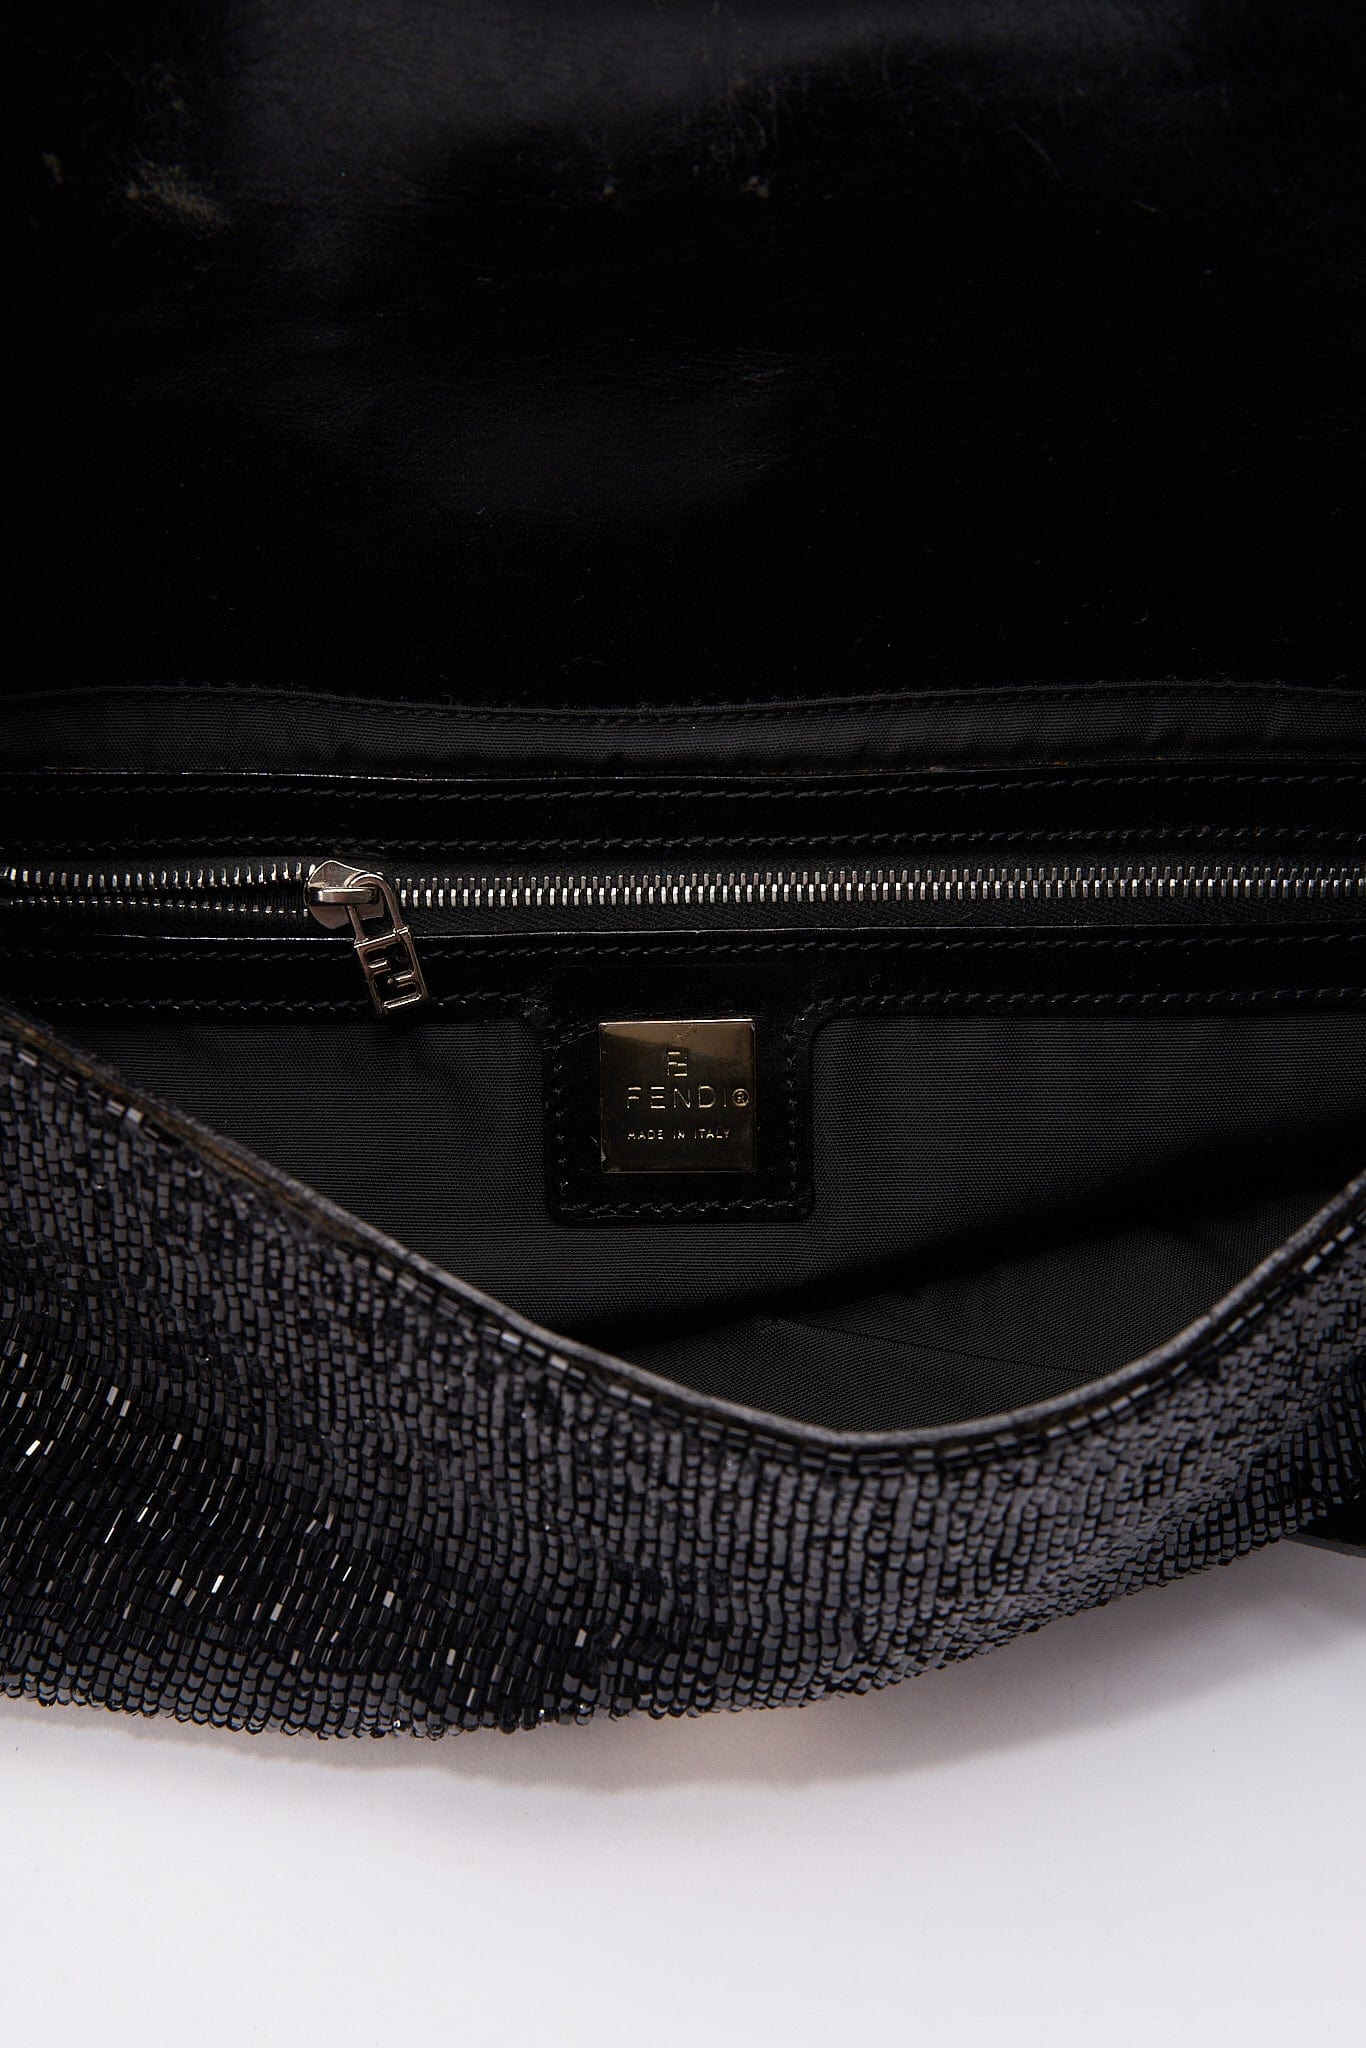 Fendi Black Sequin Beaded Baguette Bag